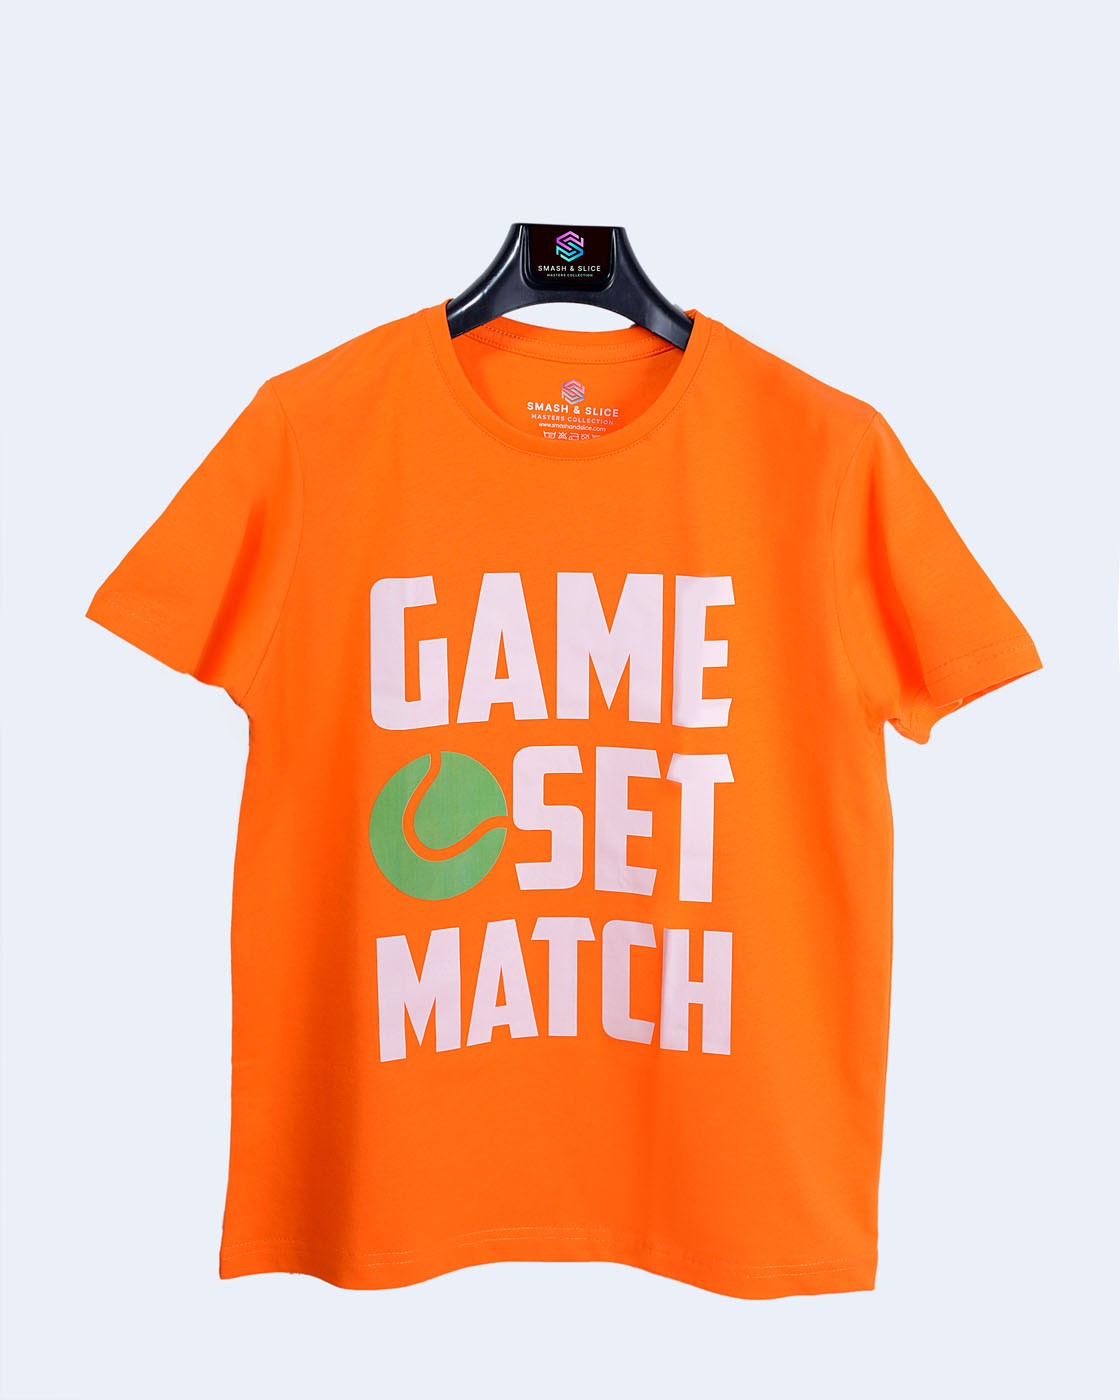 Smash & Slice Tenis Temali Baskılı Unisex Çocuk T-Shirt "game Set Match"